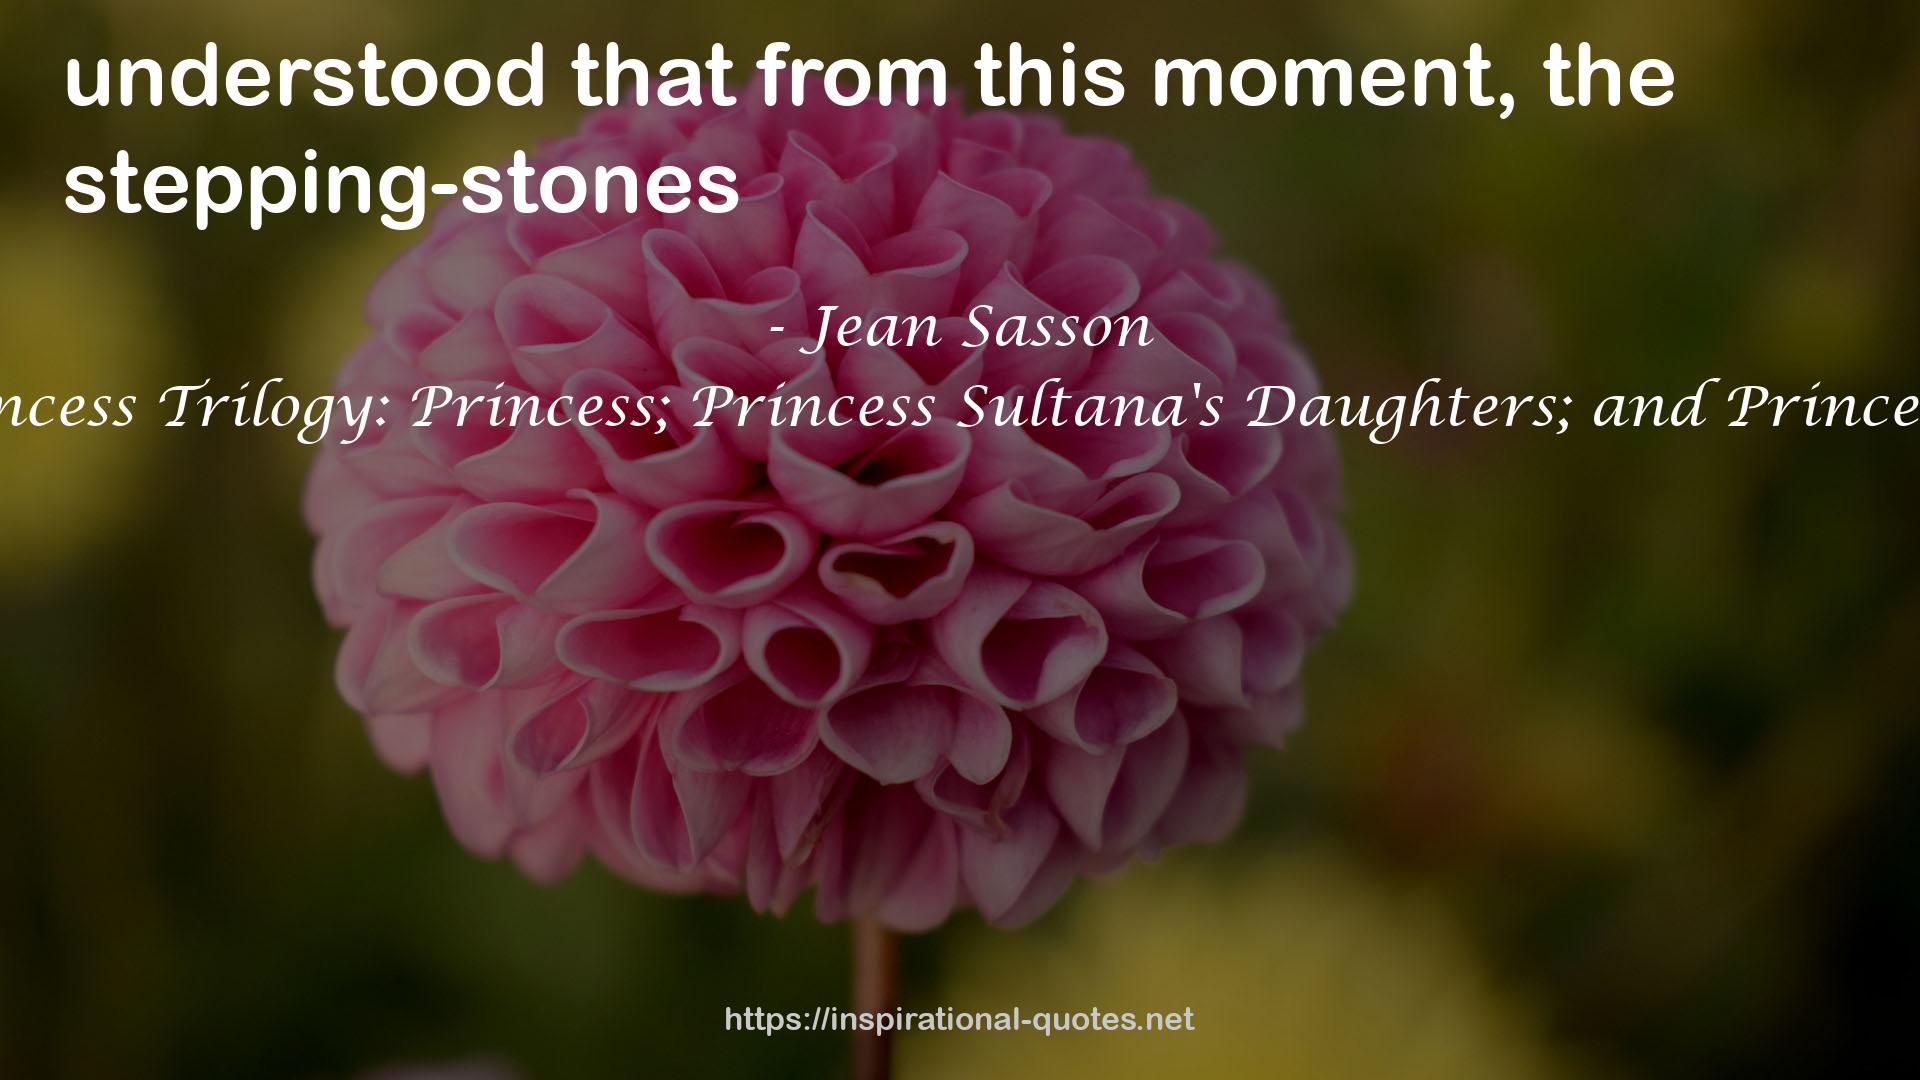 The Complete Princess Trilogy: Princess; Princess Sultana's Daughters; and Princess Sultana's Circle QUOTES